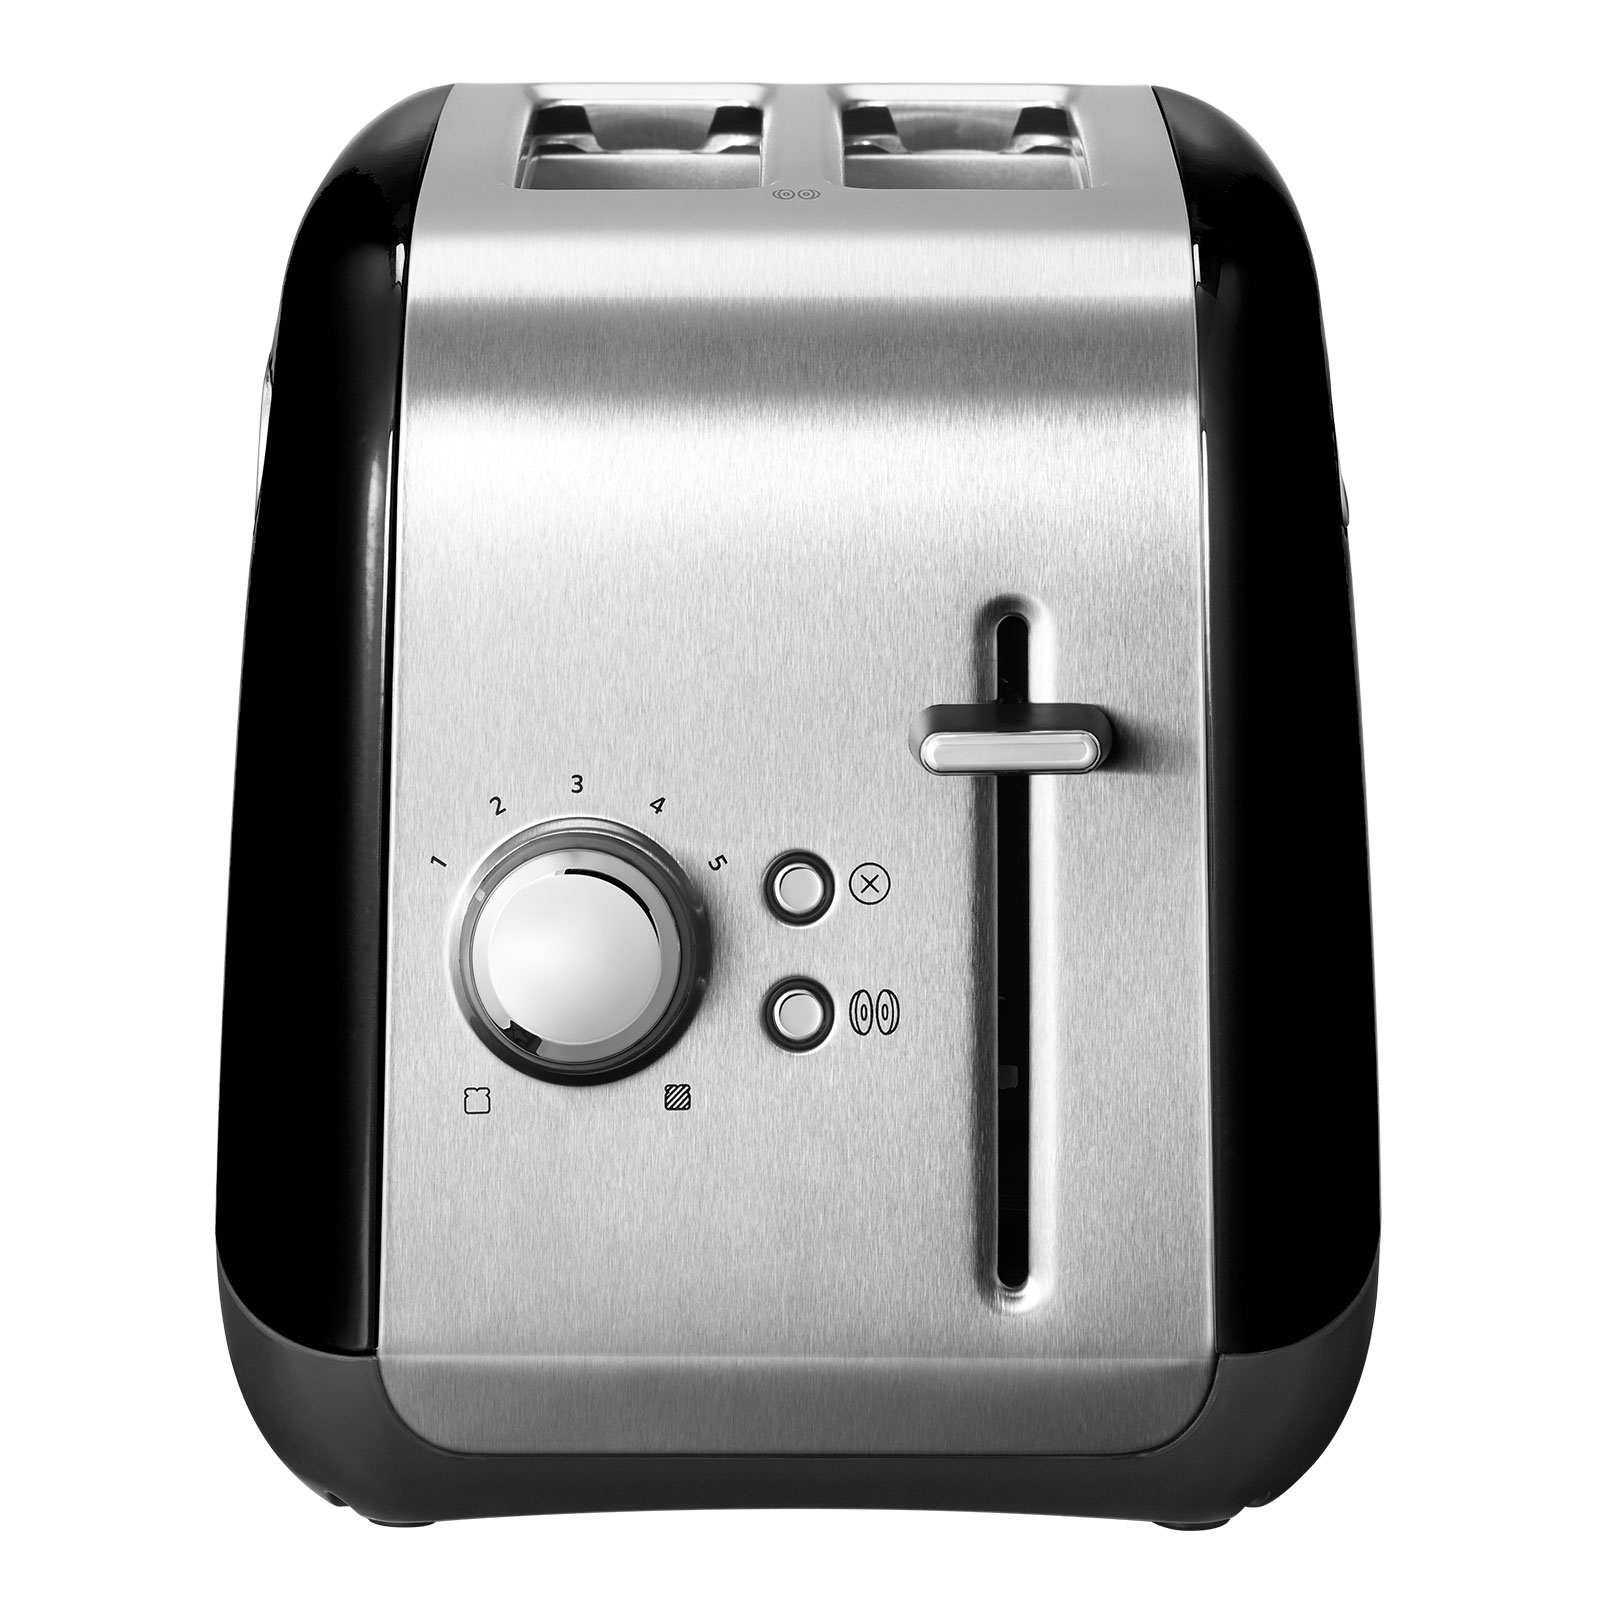 KitchenAid 5KMT2115EOB Classic Toaster